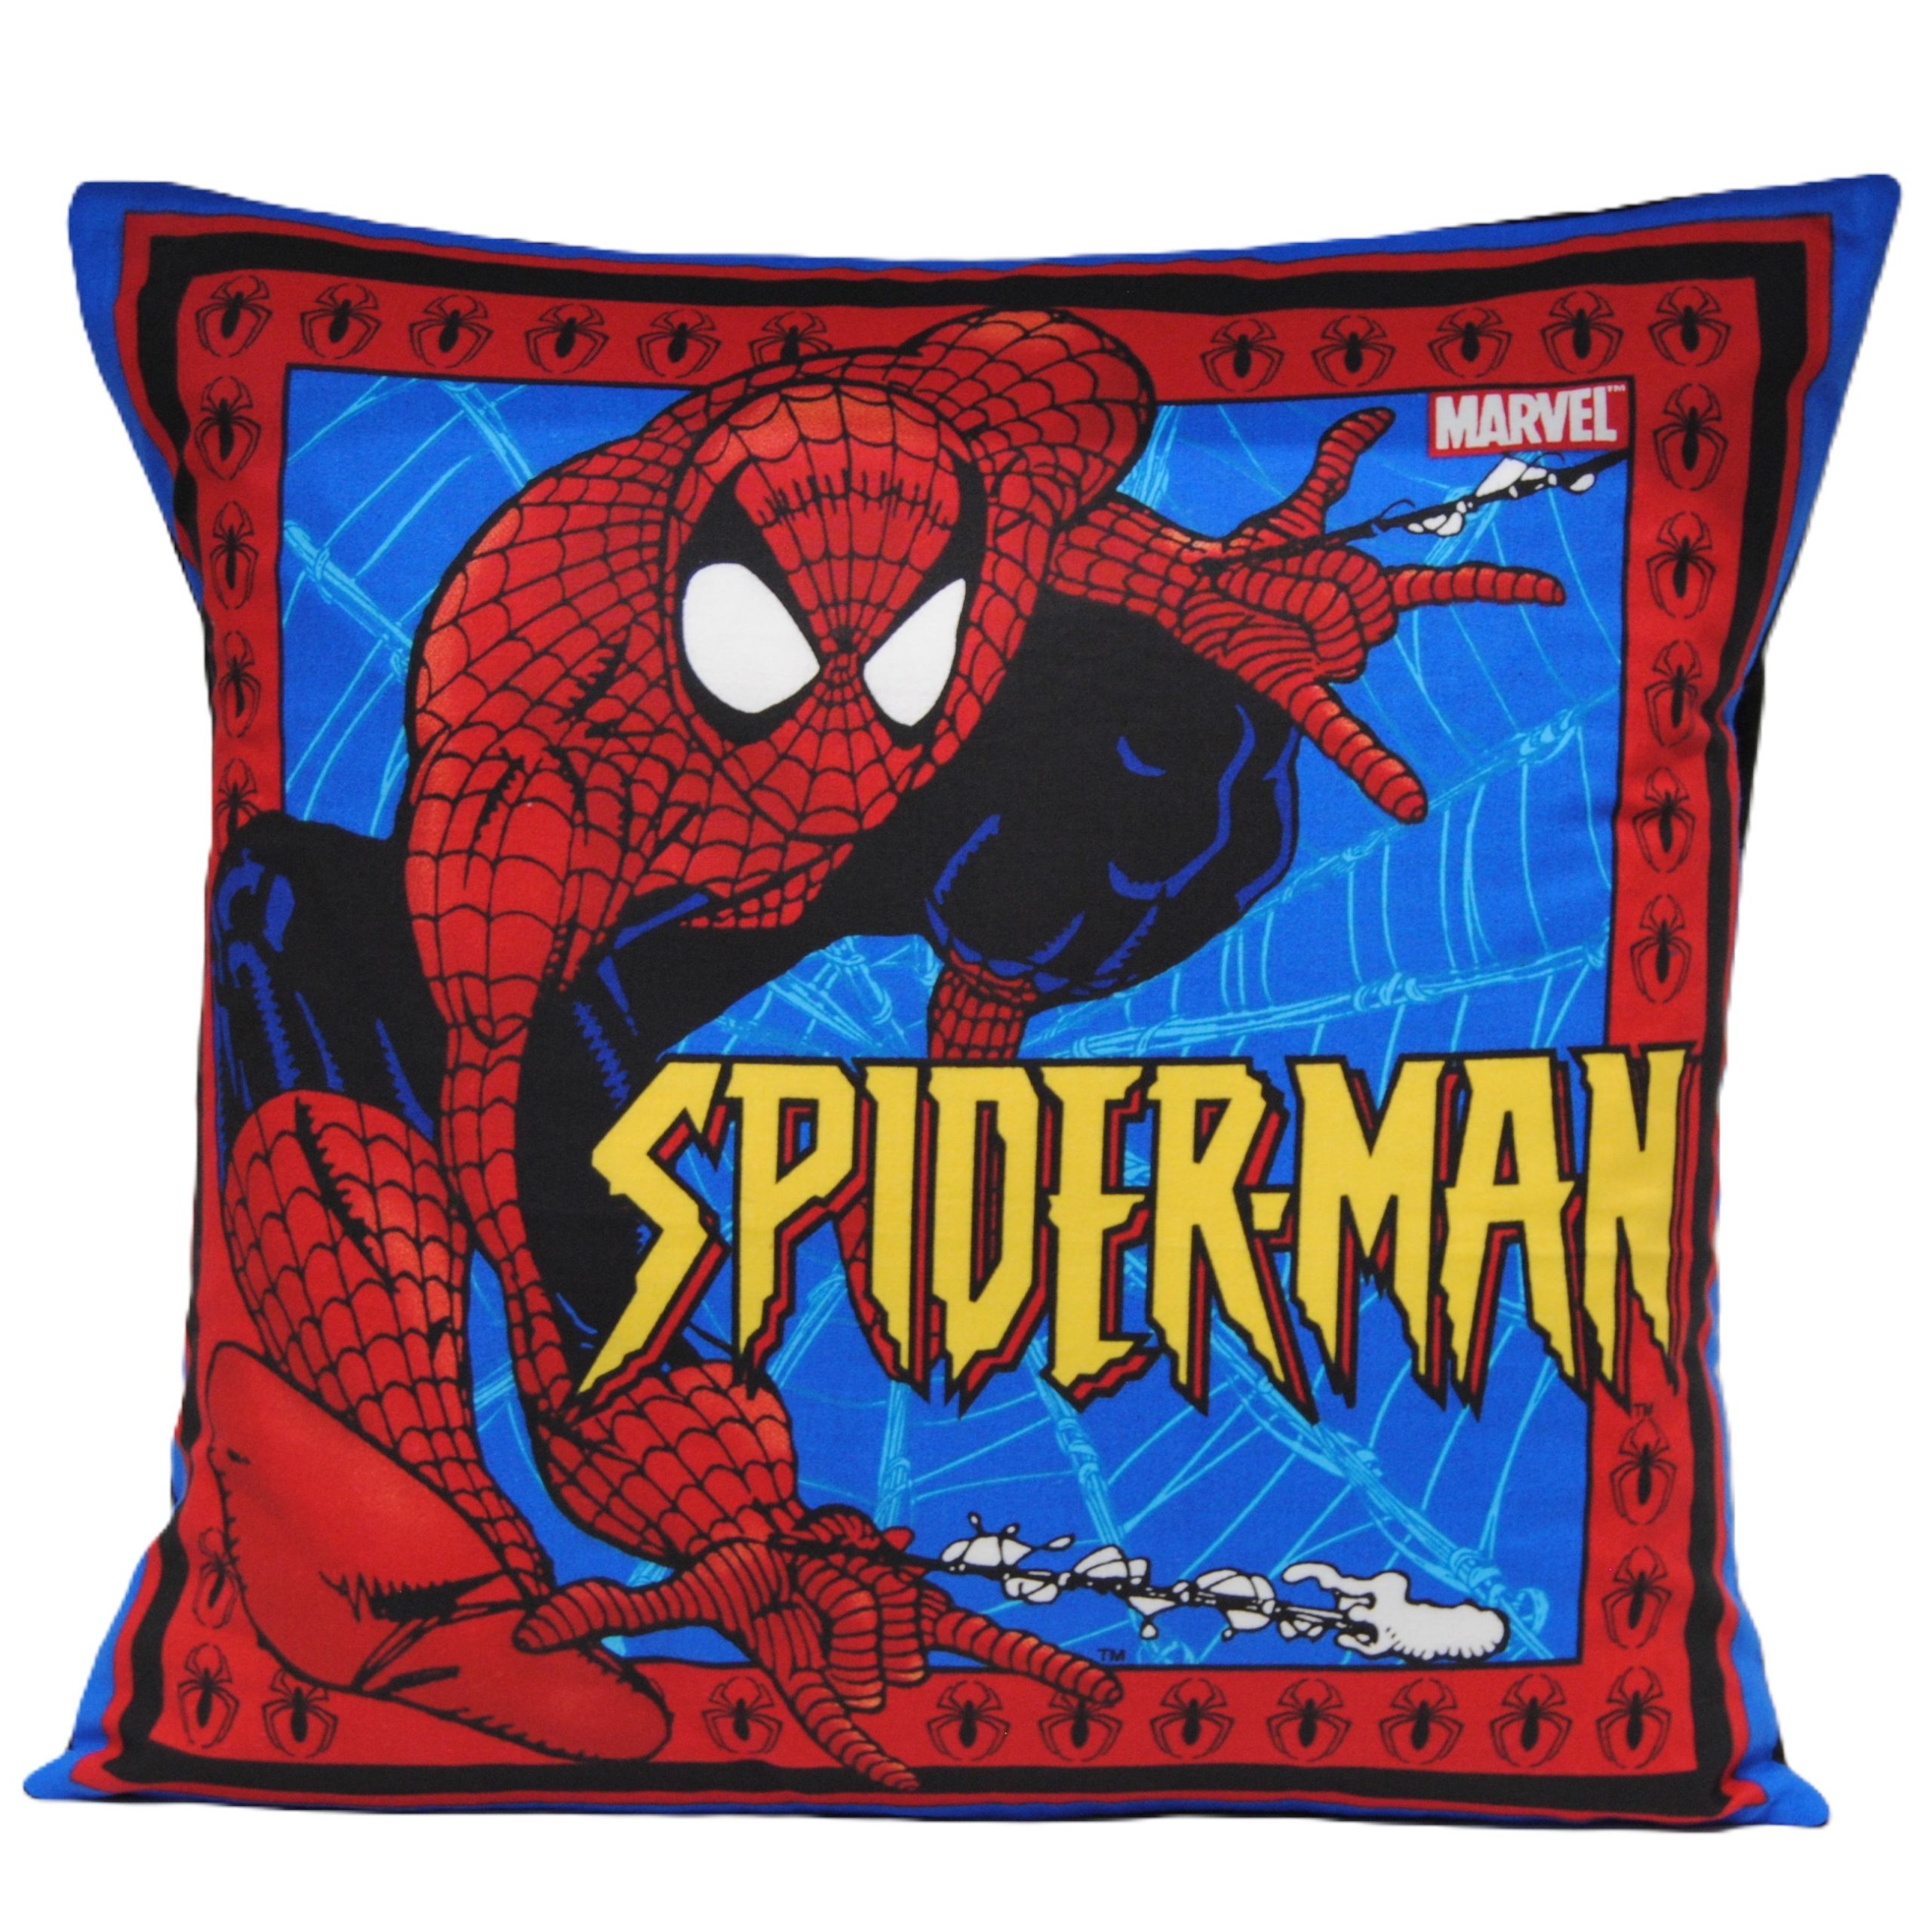 Spider-Man Cushion